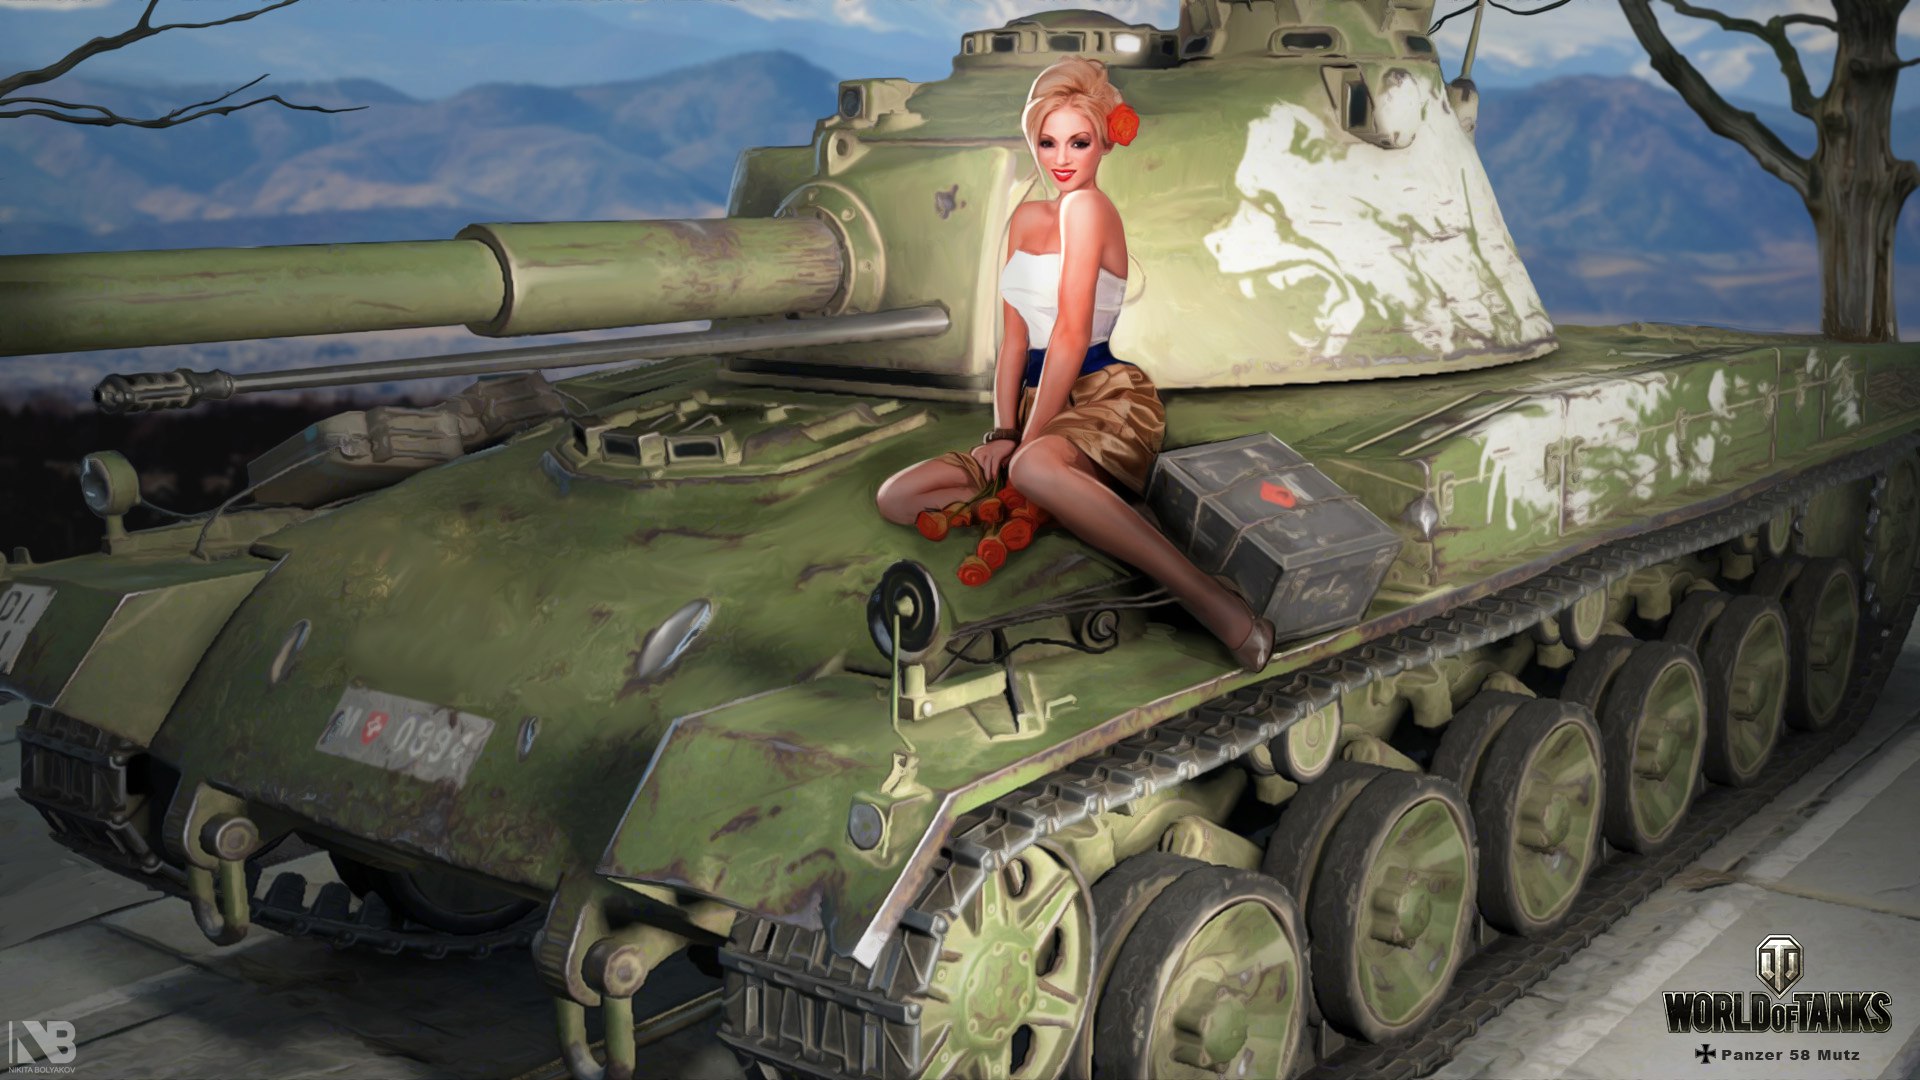 Красивые девушки и танки